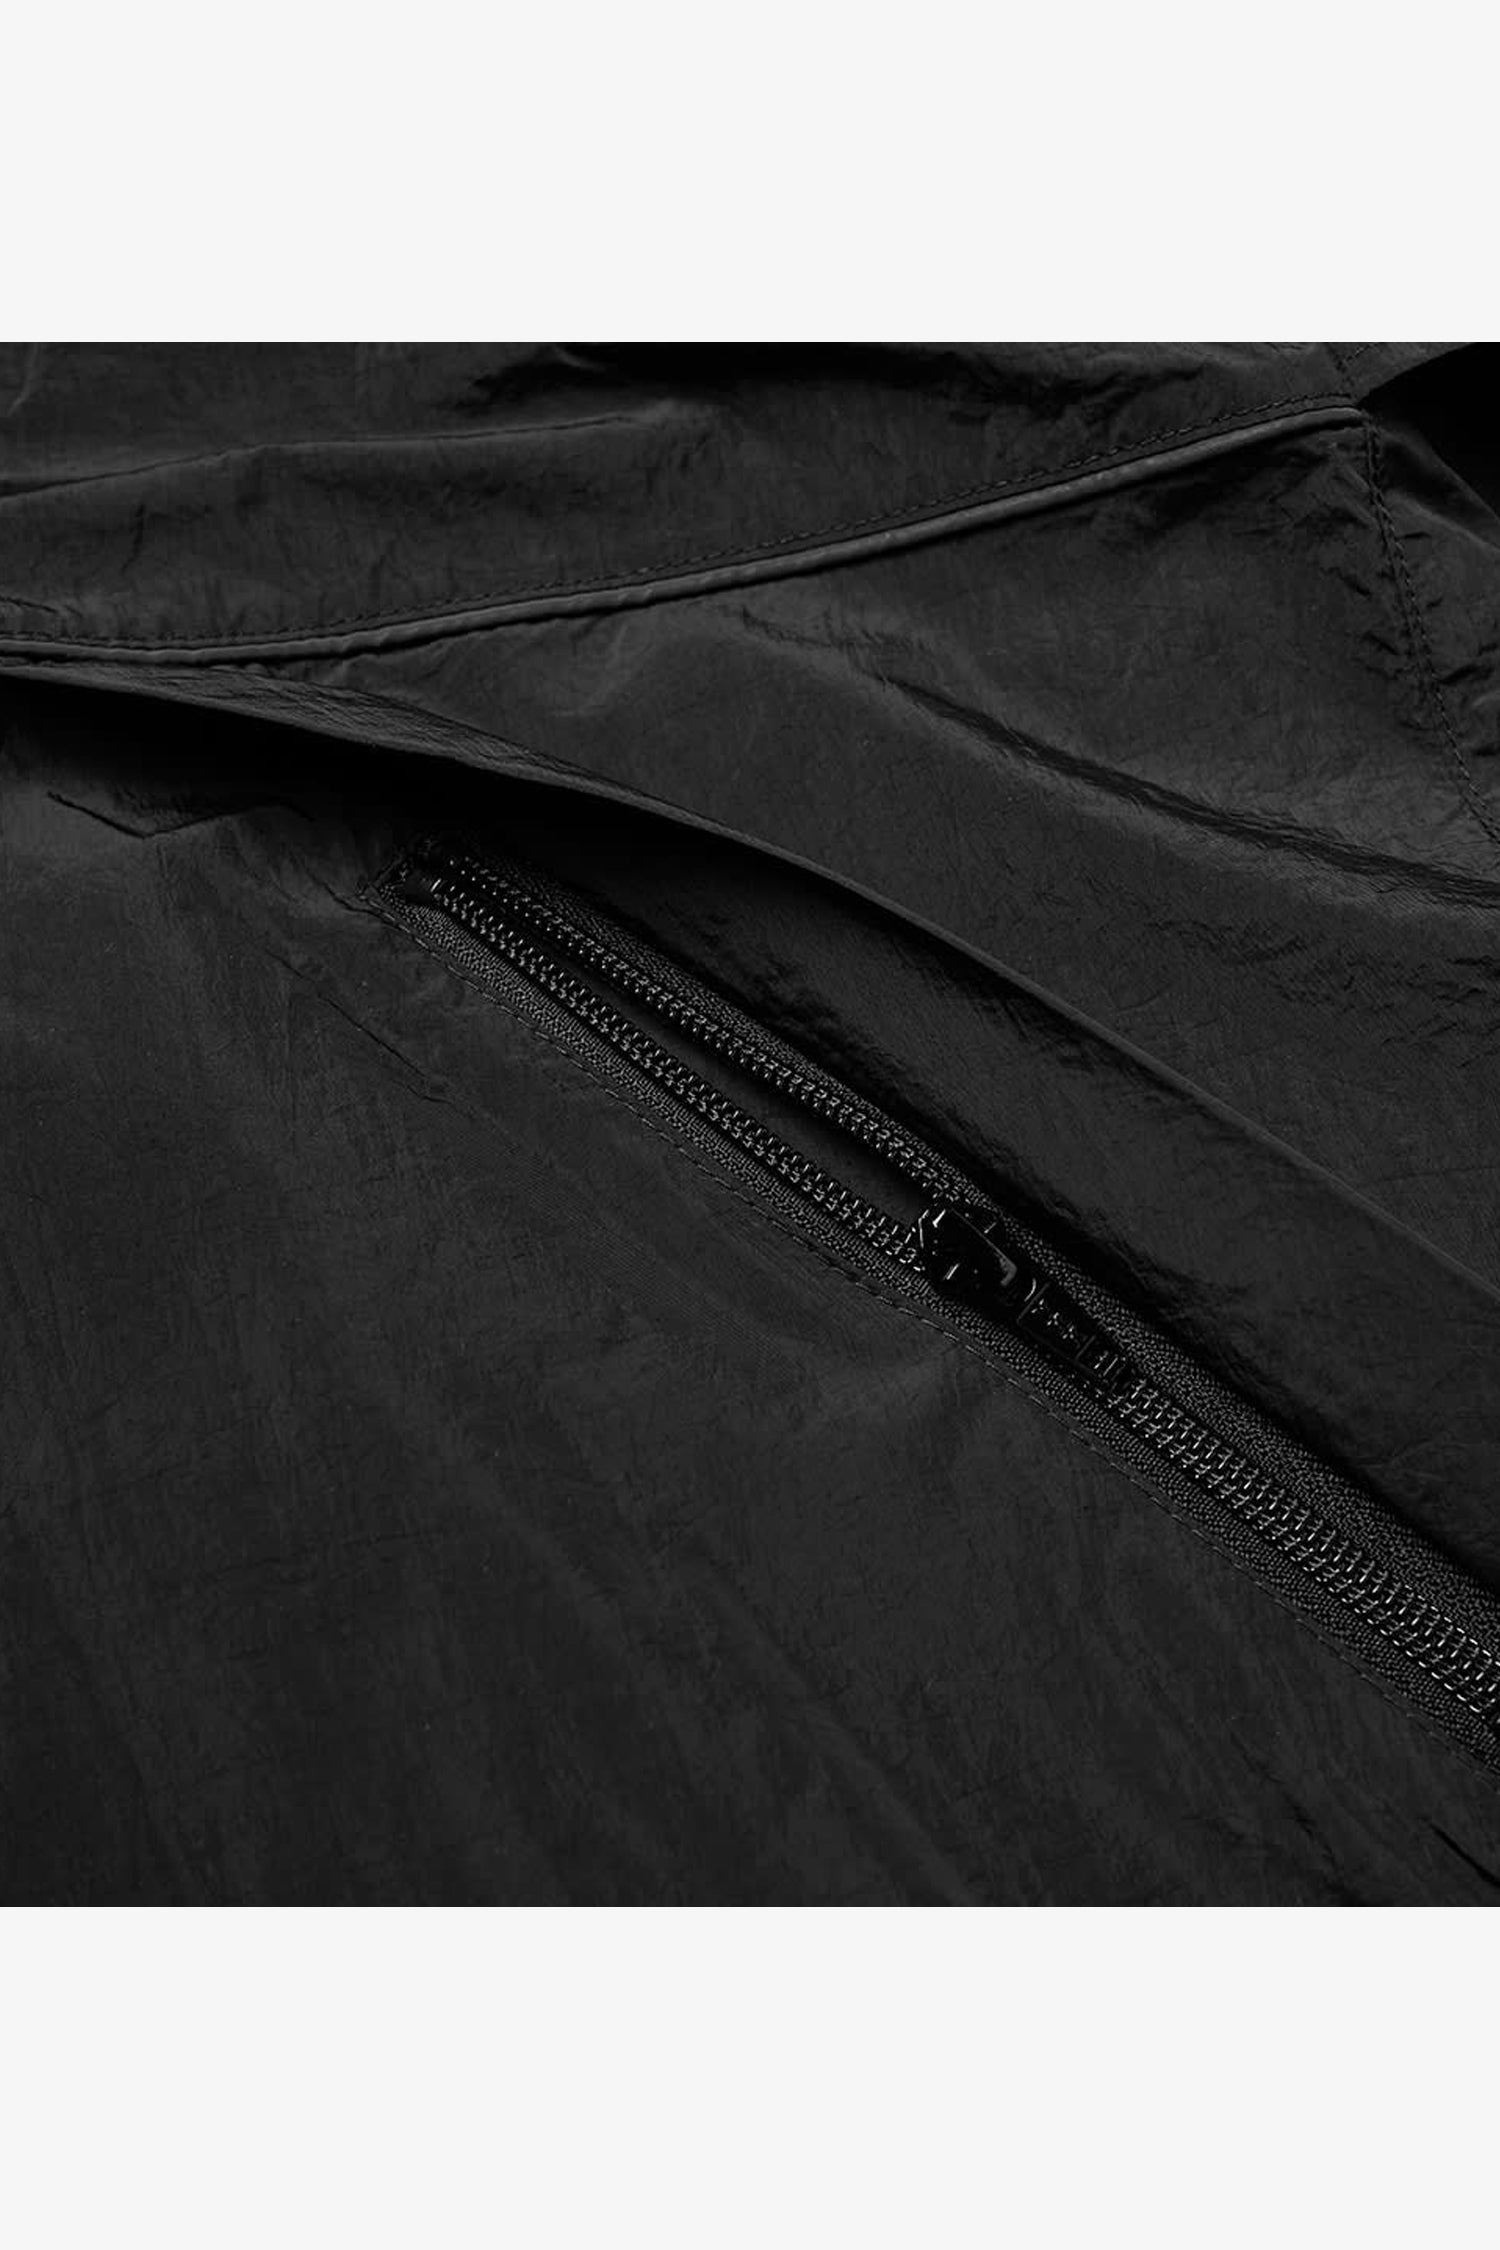 Selectshop FRAME - RASSVET Track Jacket Outerwear Dubai